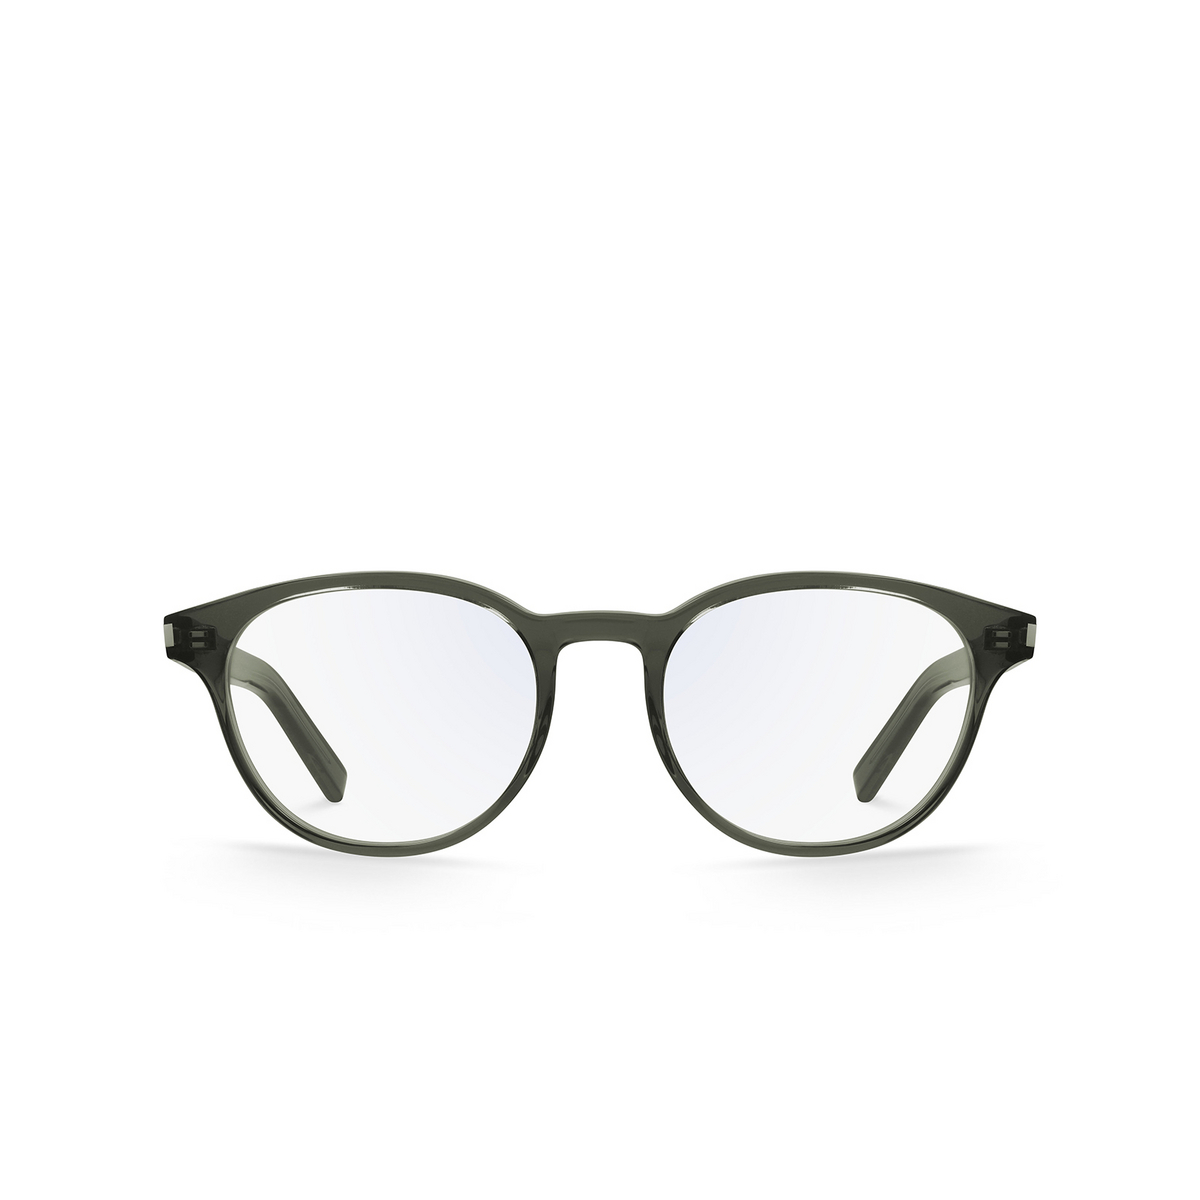 Saint Laurent CLASSIC 10 Eyeglasses 016 Green - front view